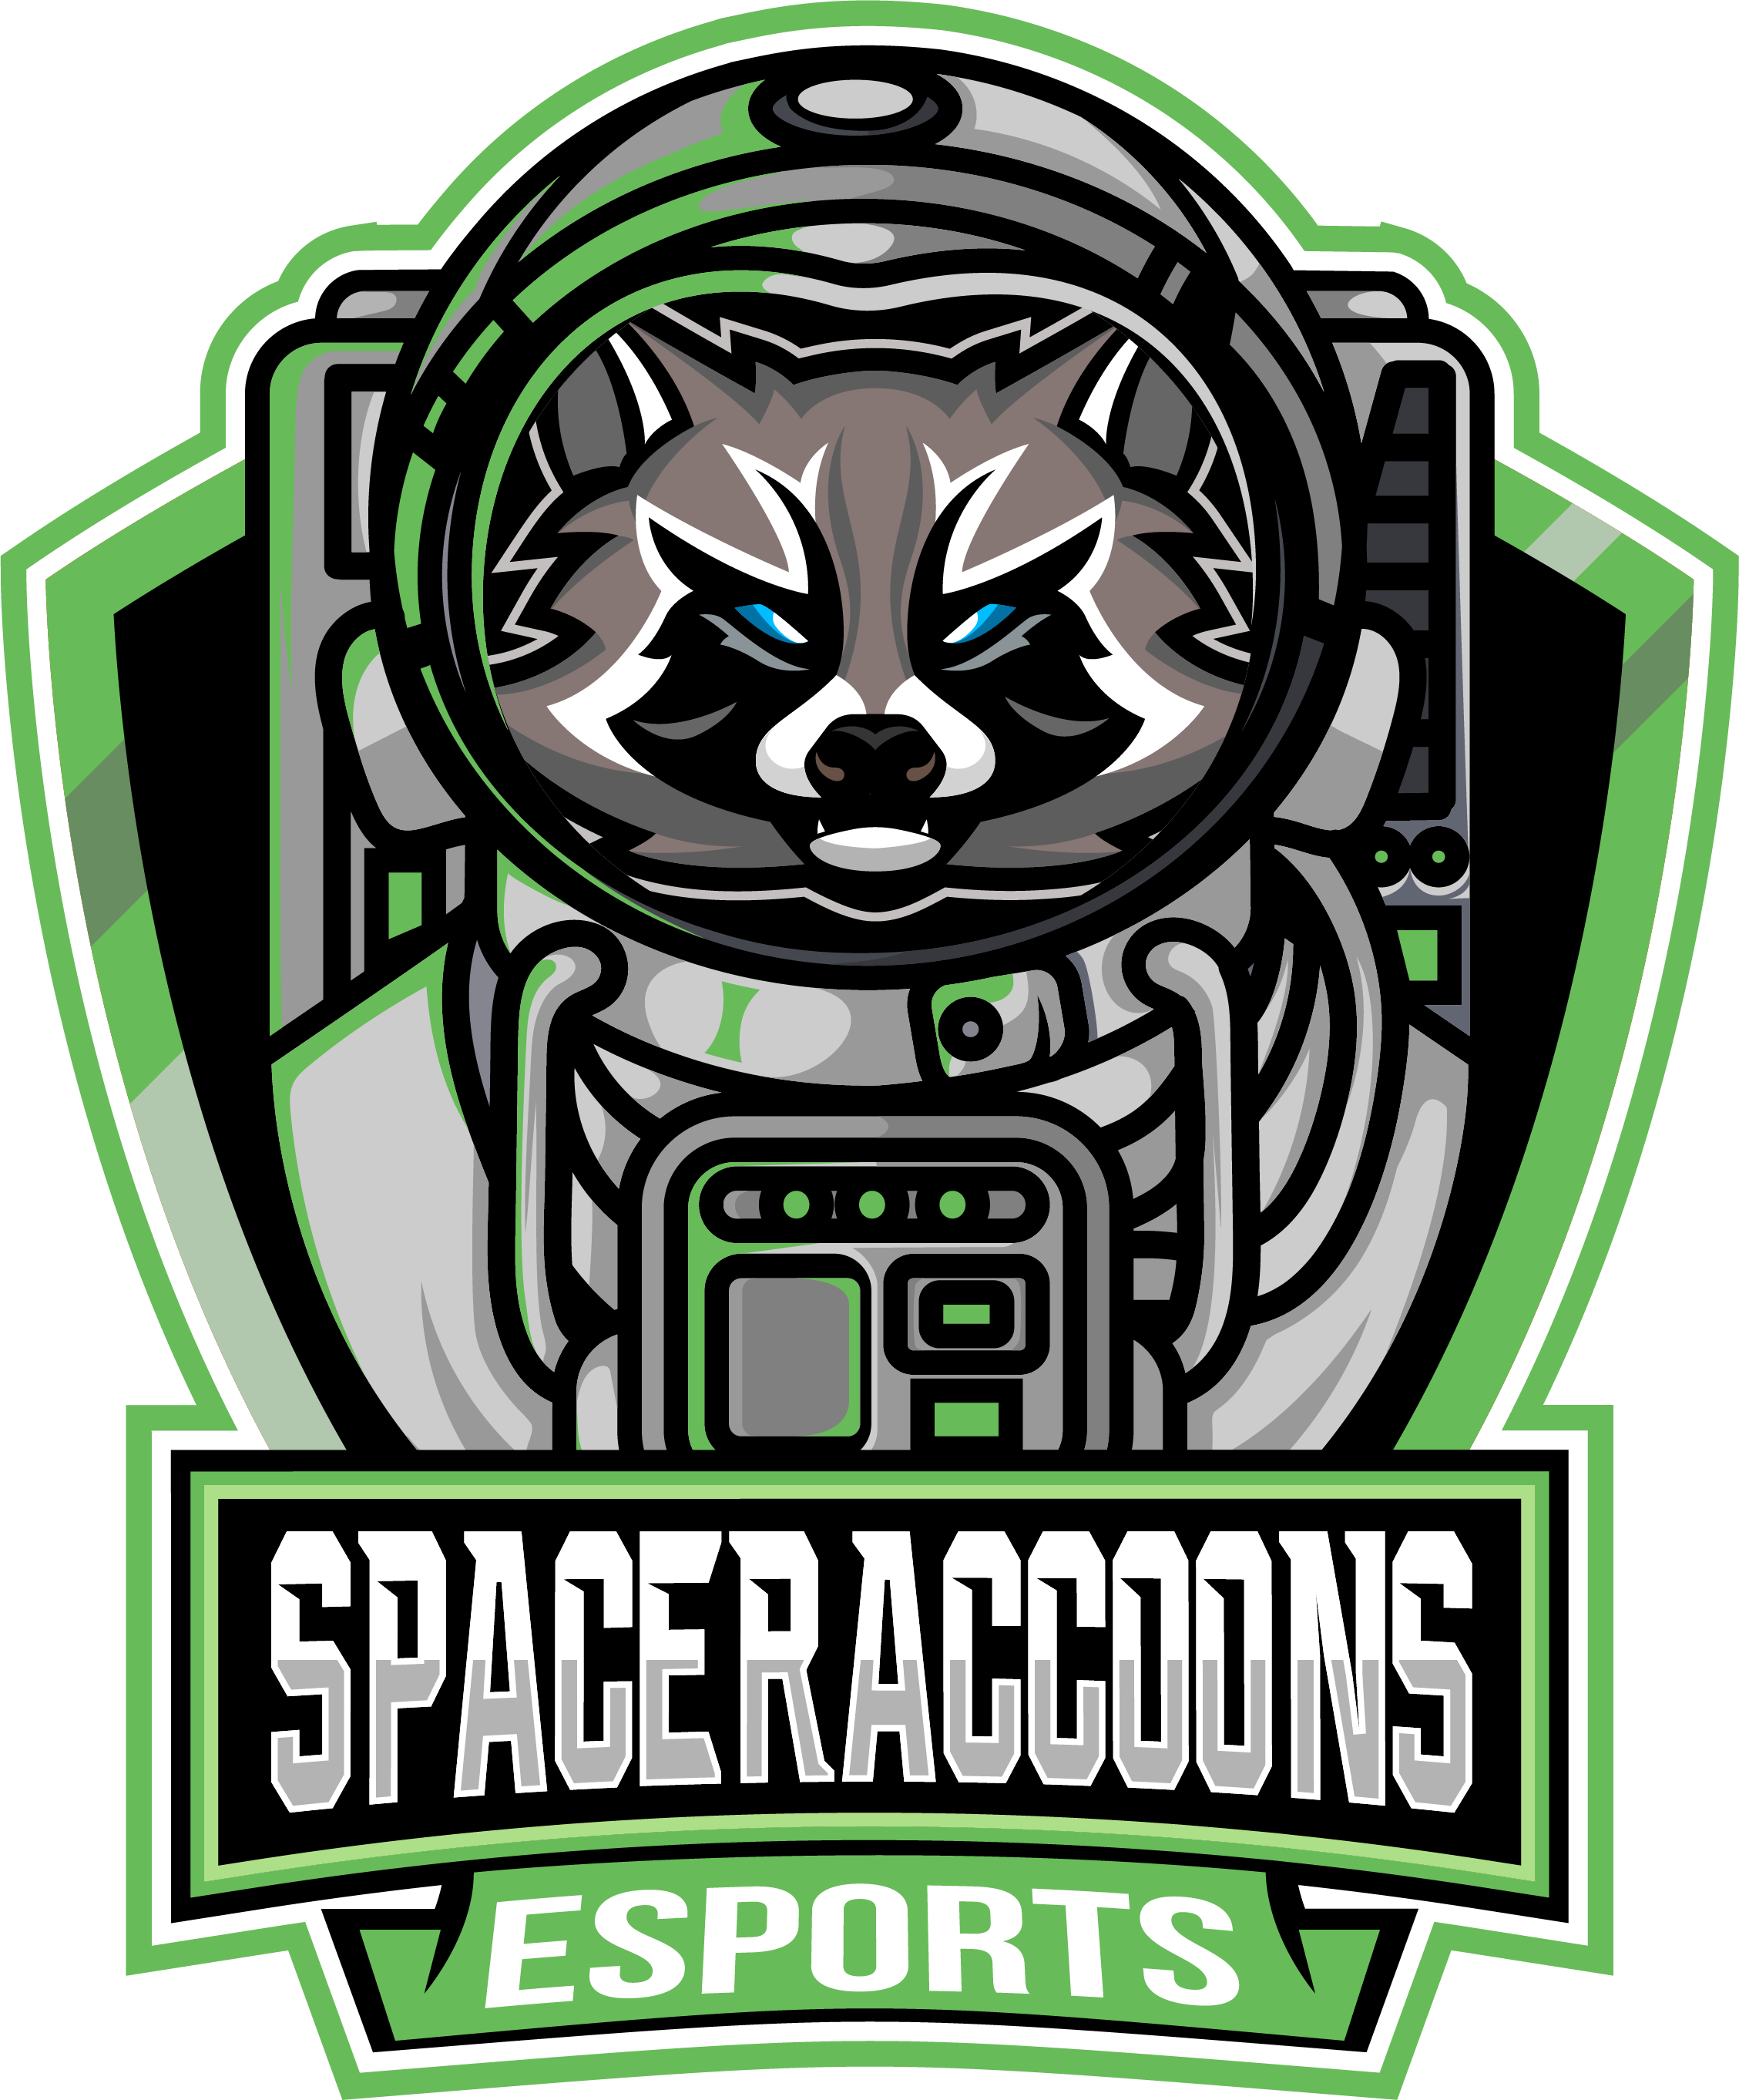 Spaceraccoons eSports